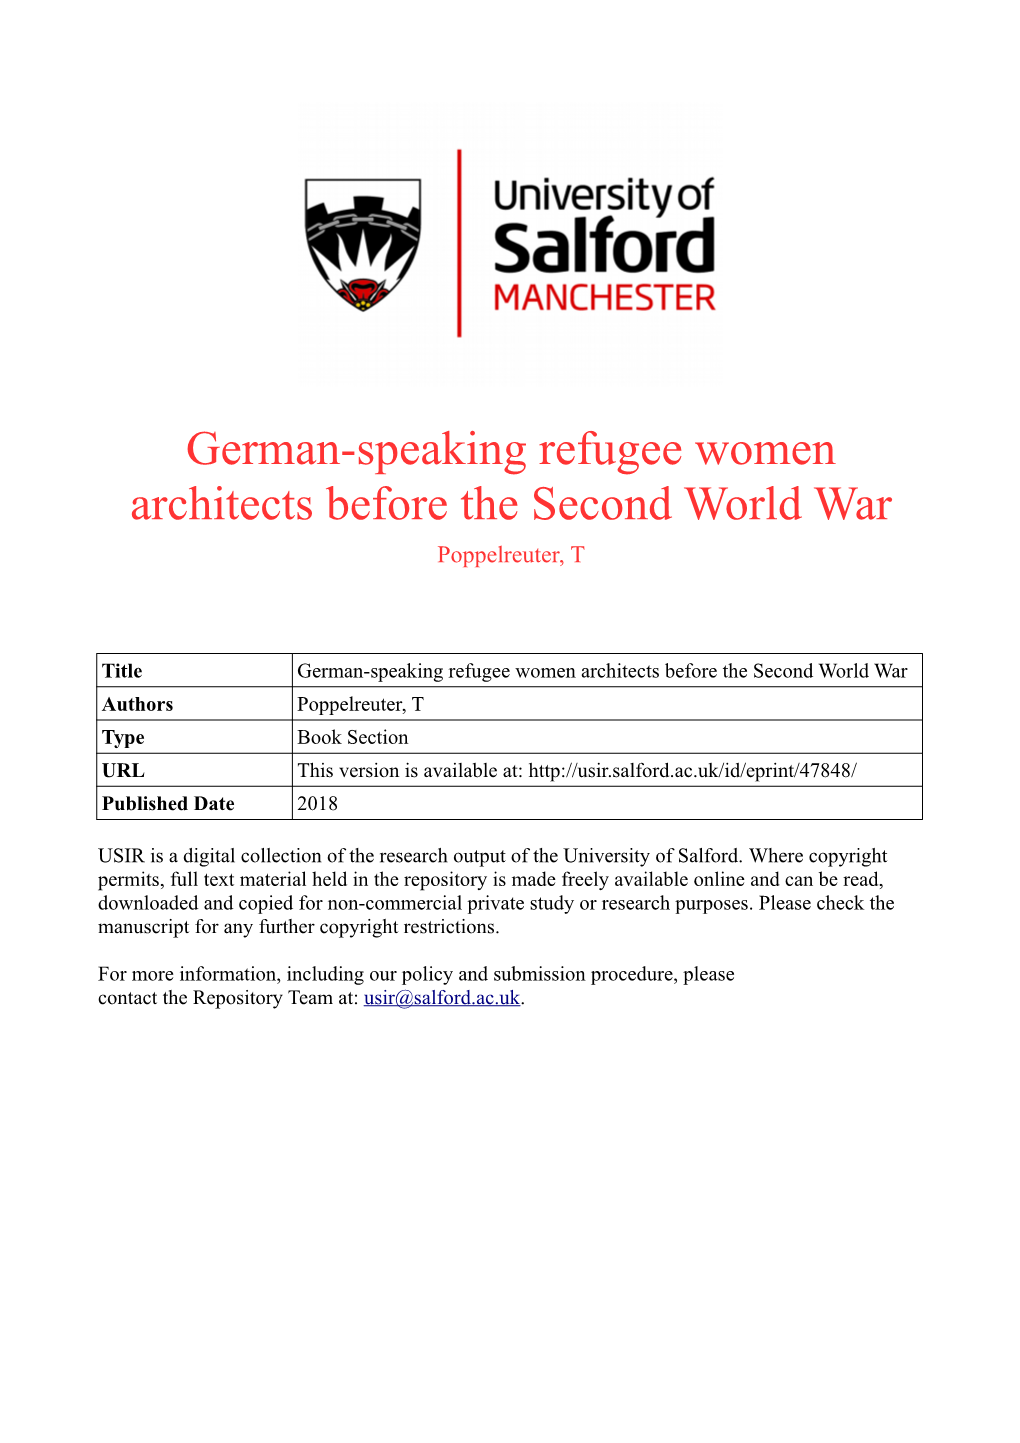 German-Speaking Refugee Women Architects Before the Second World War Poppelreuter, T